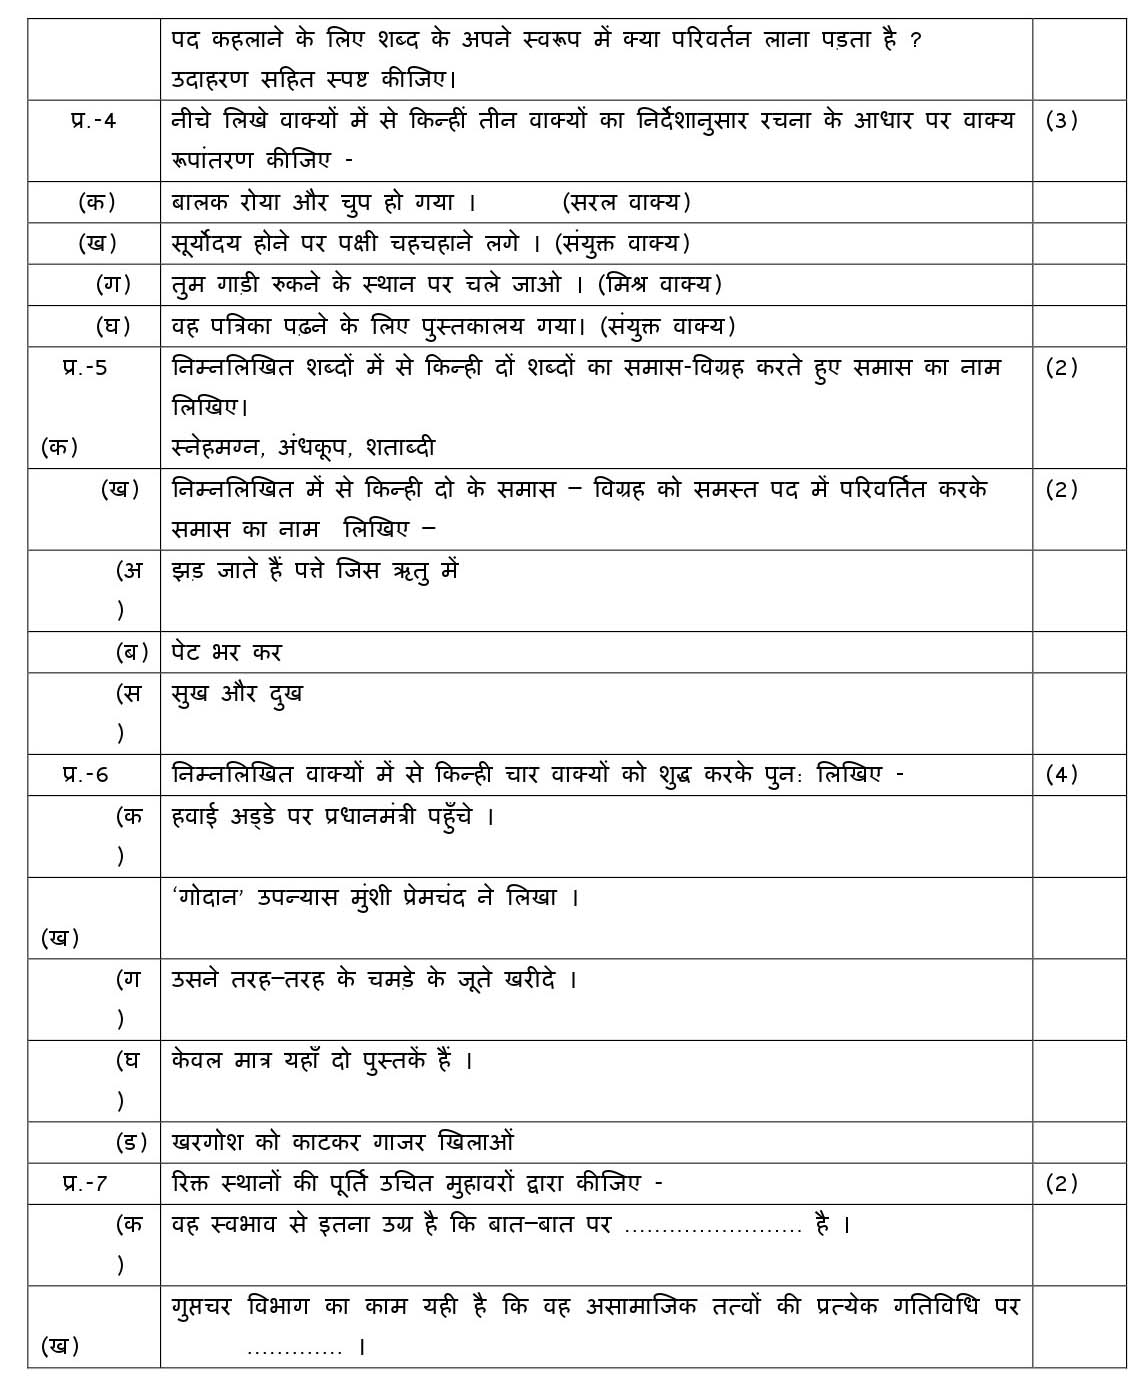 Hindi B CBSE Class X Sample Question Paper 2018-19 - Image 3